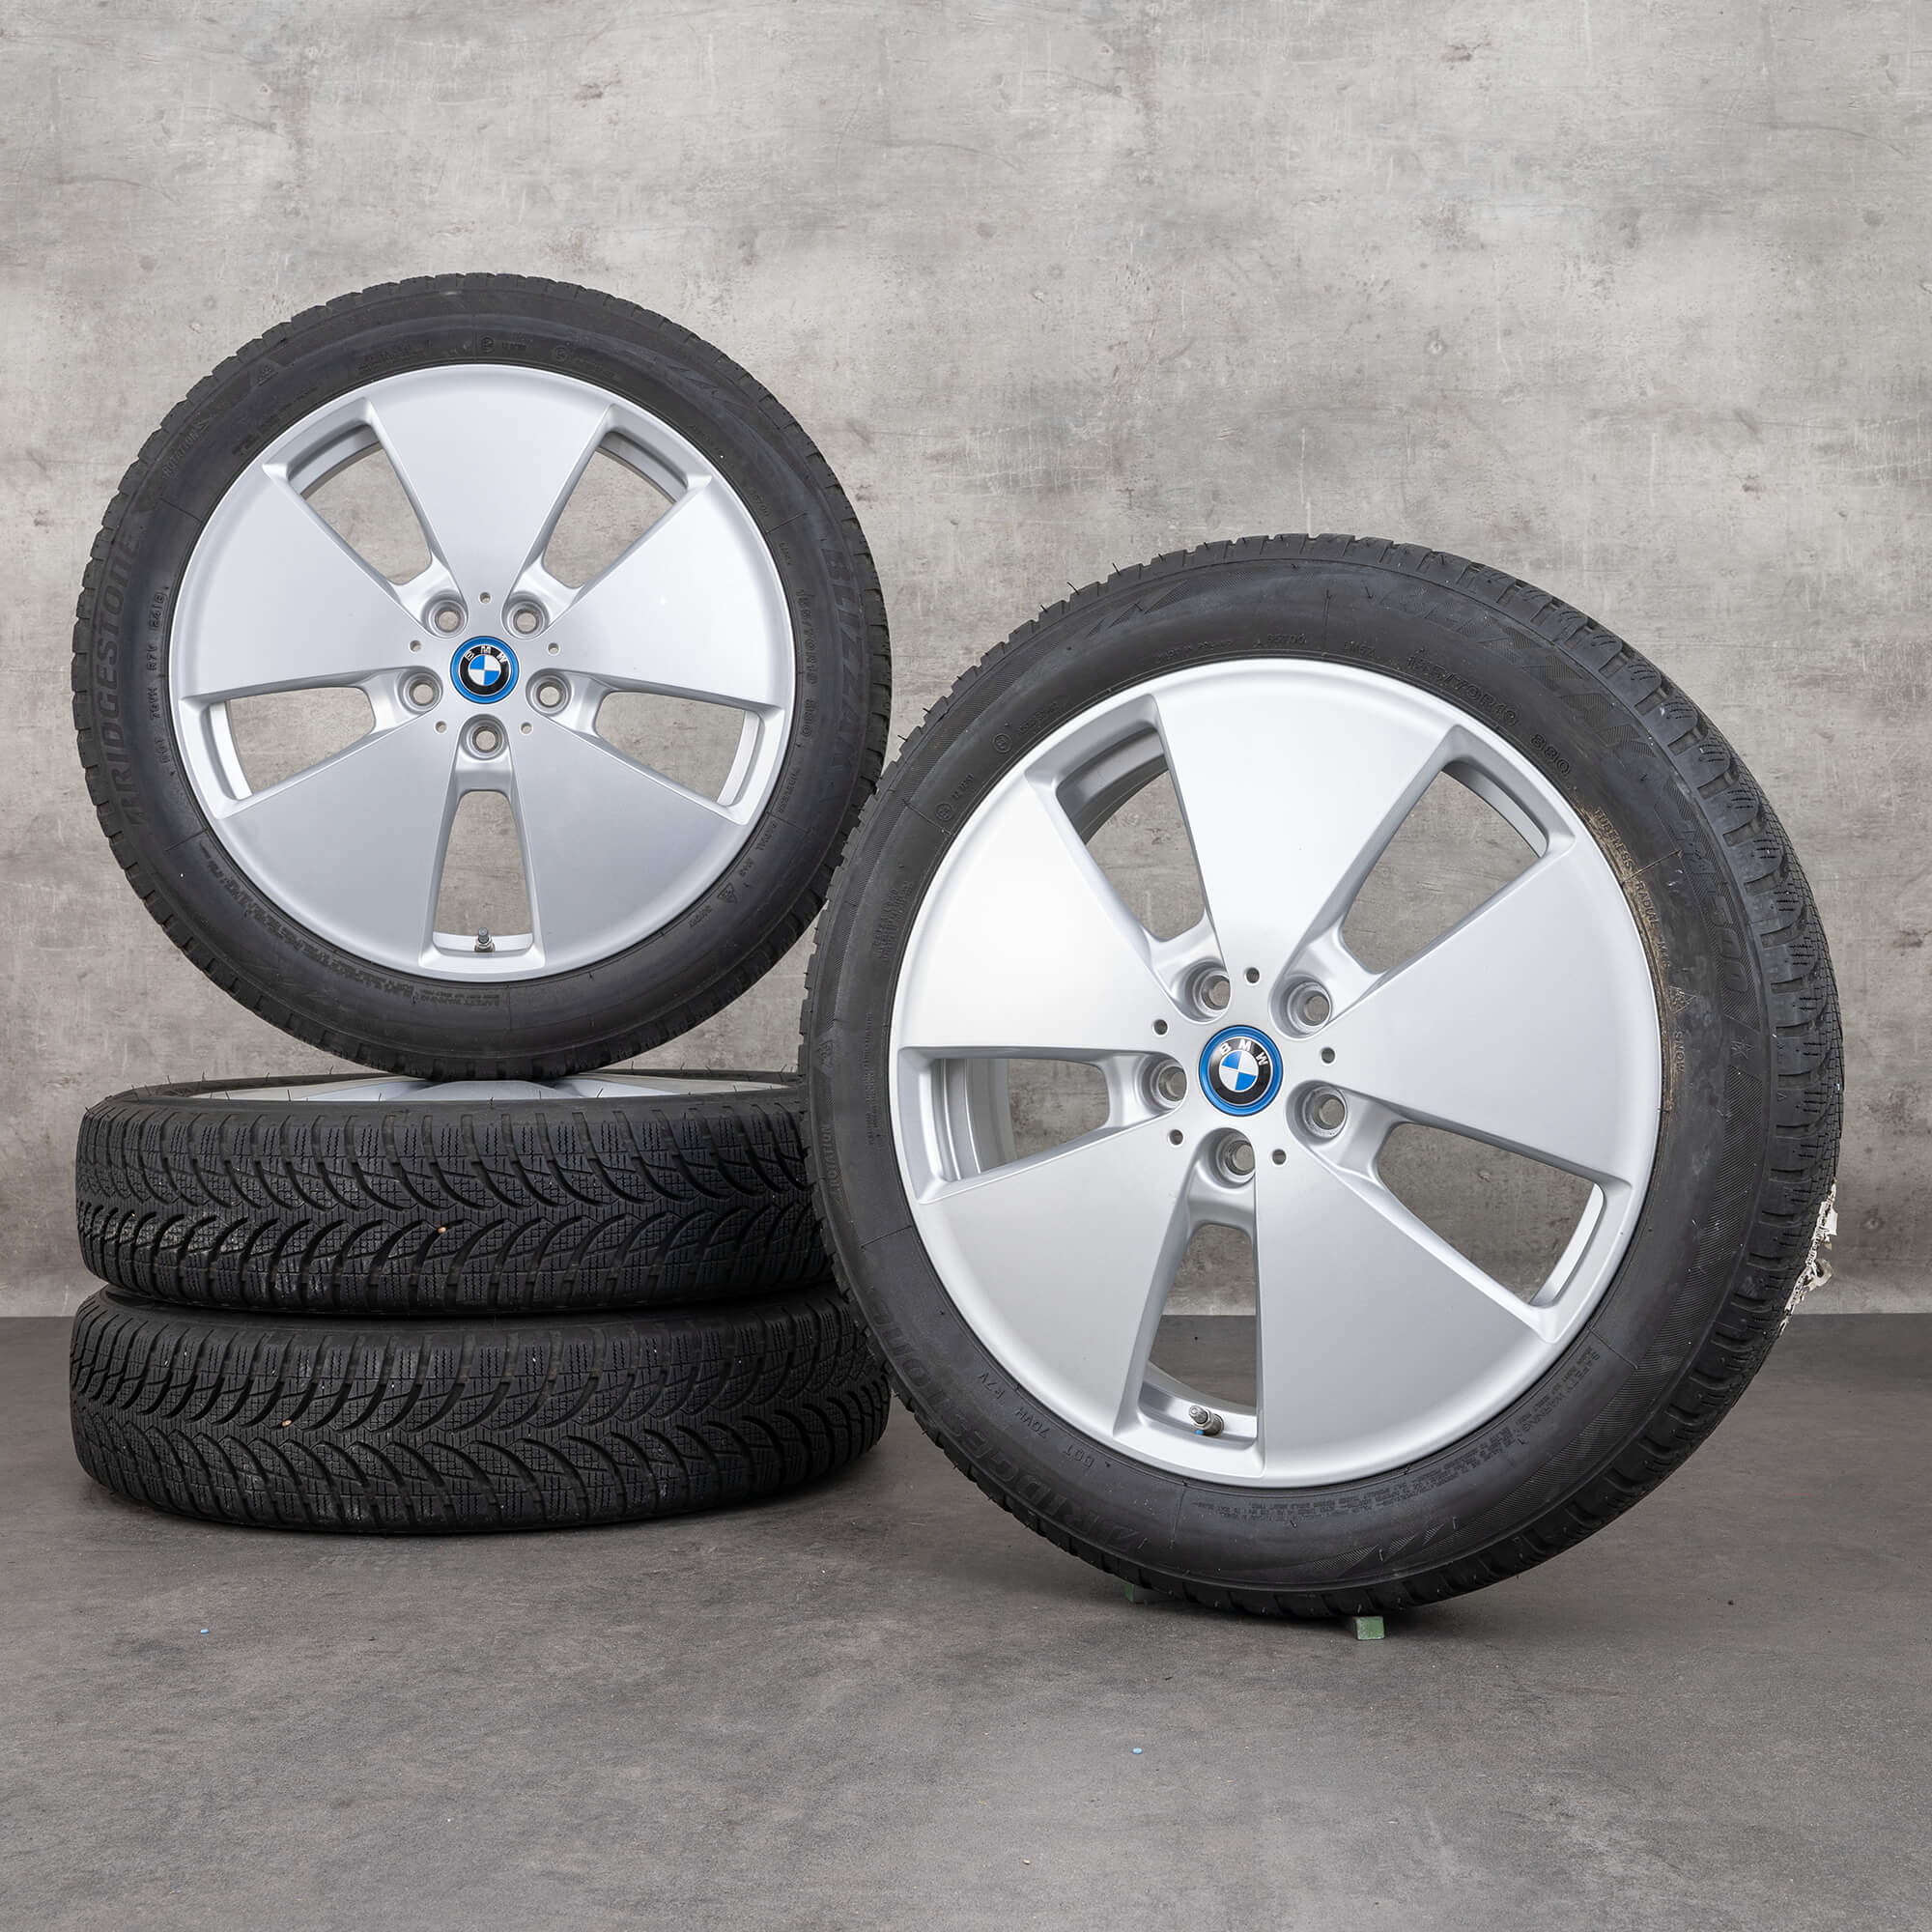 BMW 19 inch rims i3 aluminum winter tires wheels styling 427 6852053